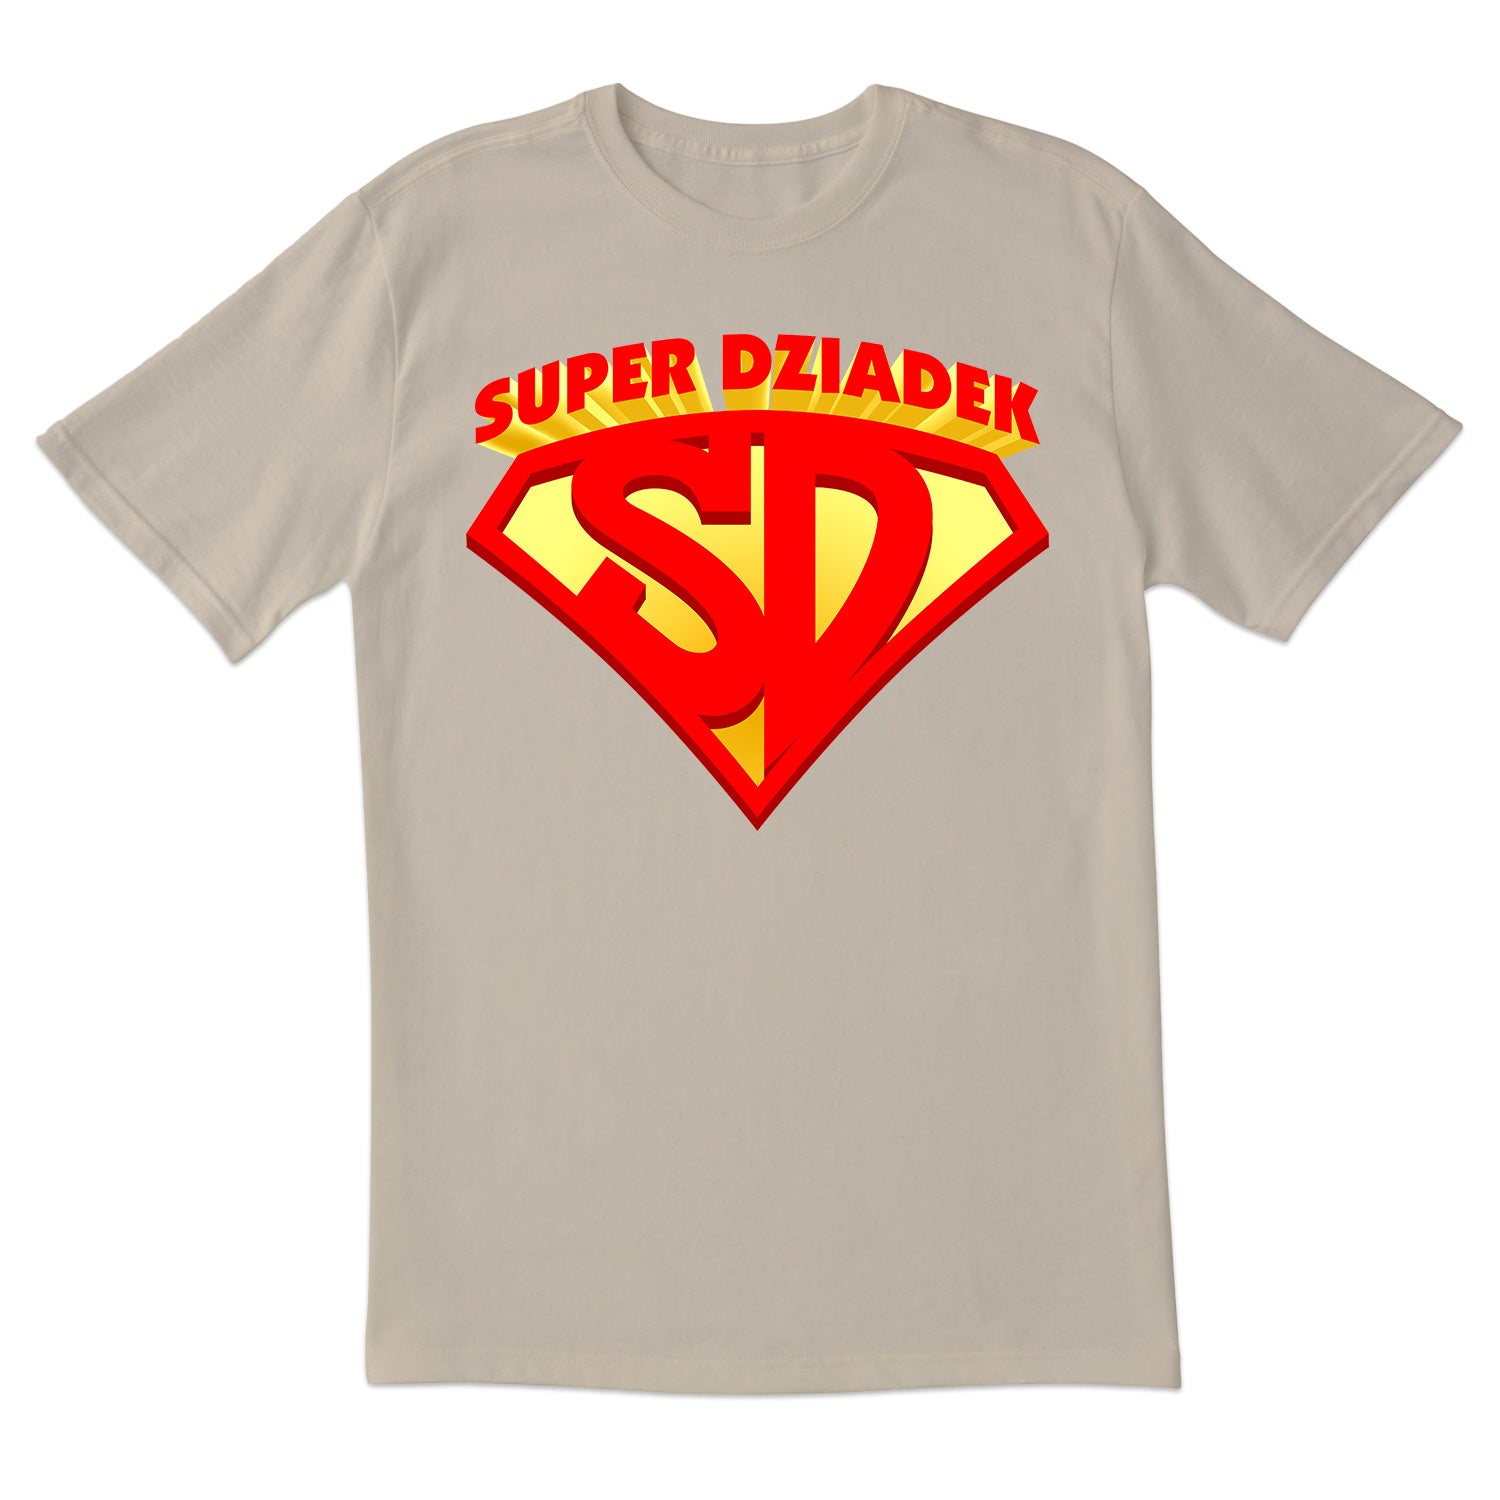 Super Dziadek Short Sleeve Tshirt